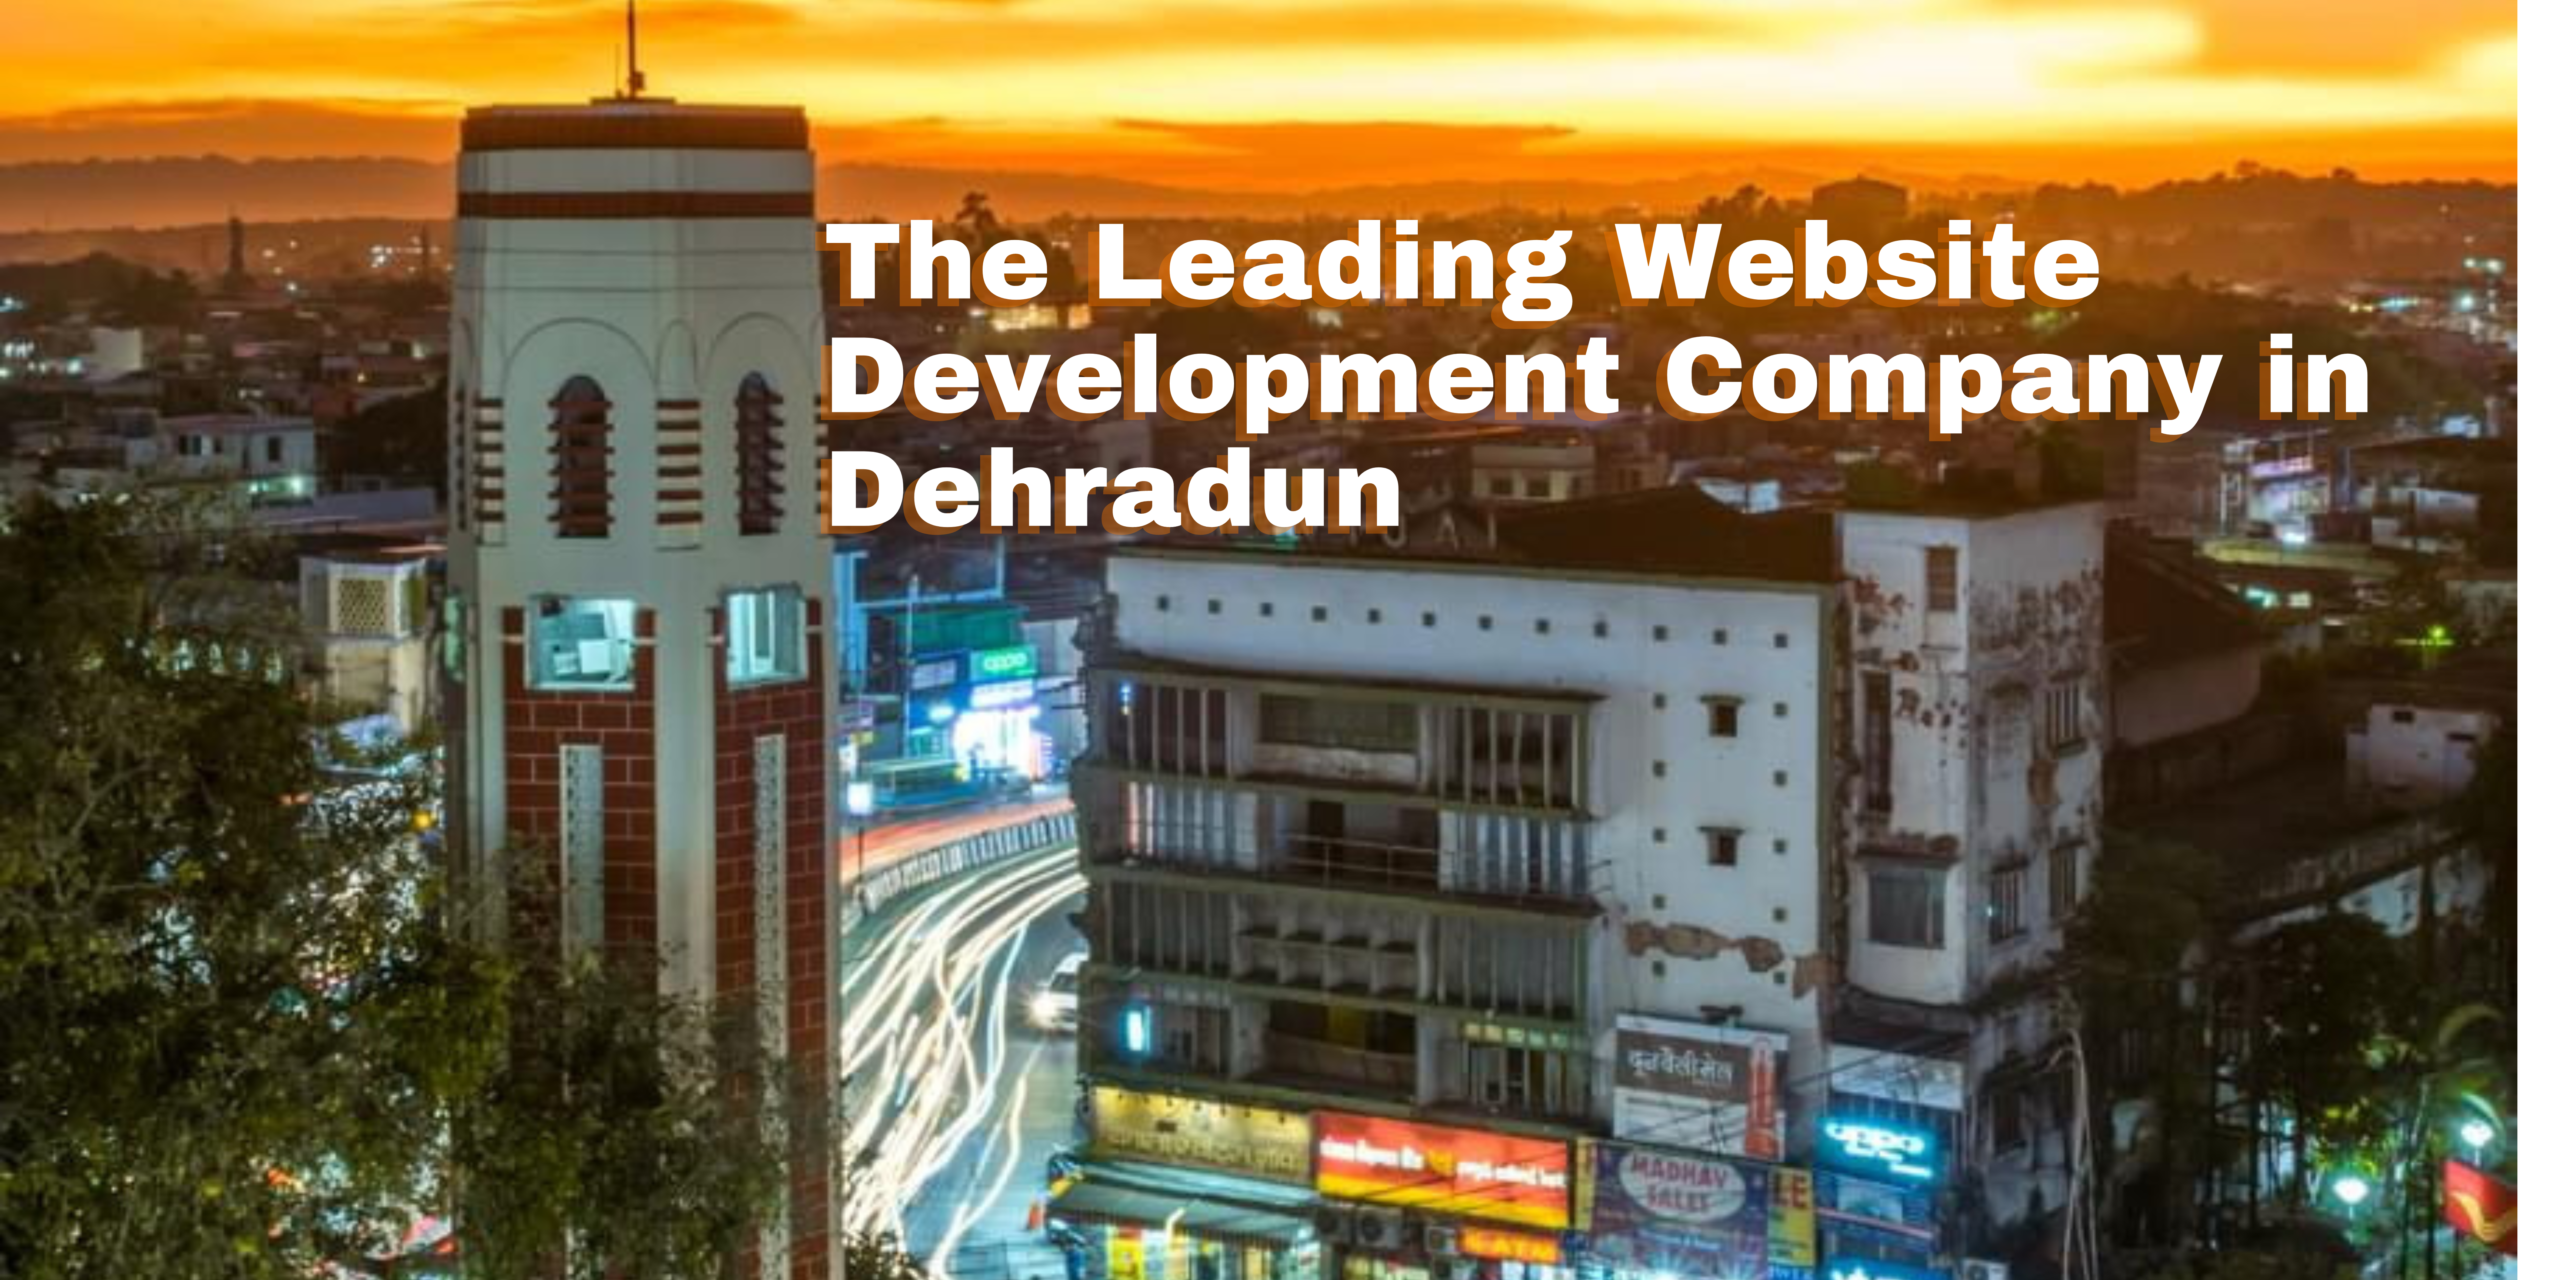 The leading website development company in Dehradun